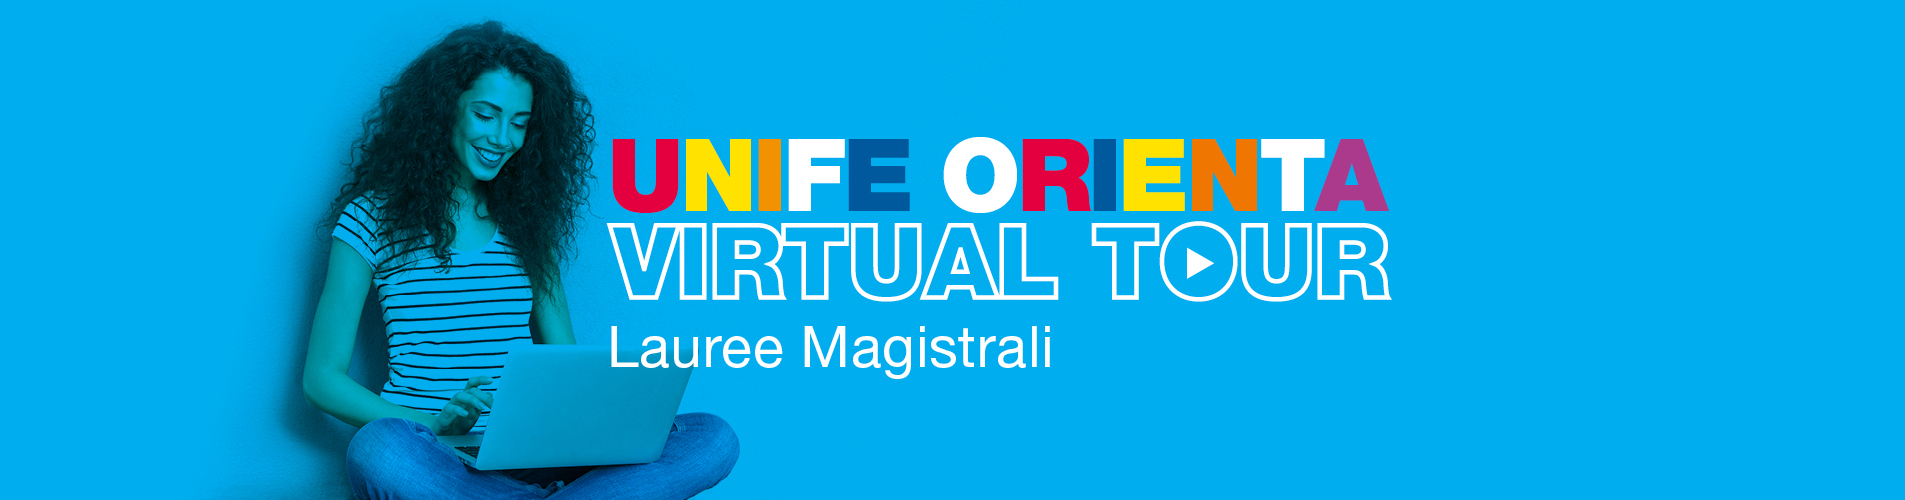 Unife Orienta Virtual Tour - Lauree Magistrali